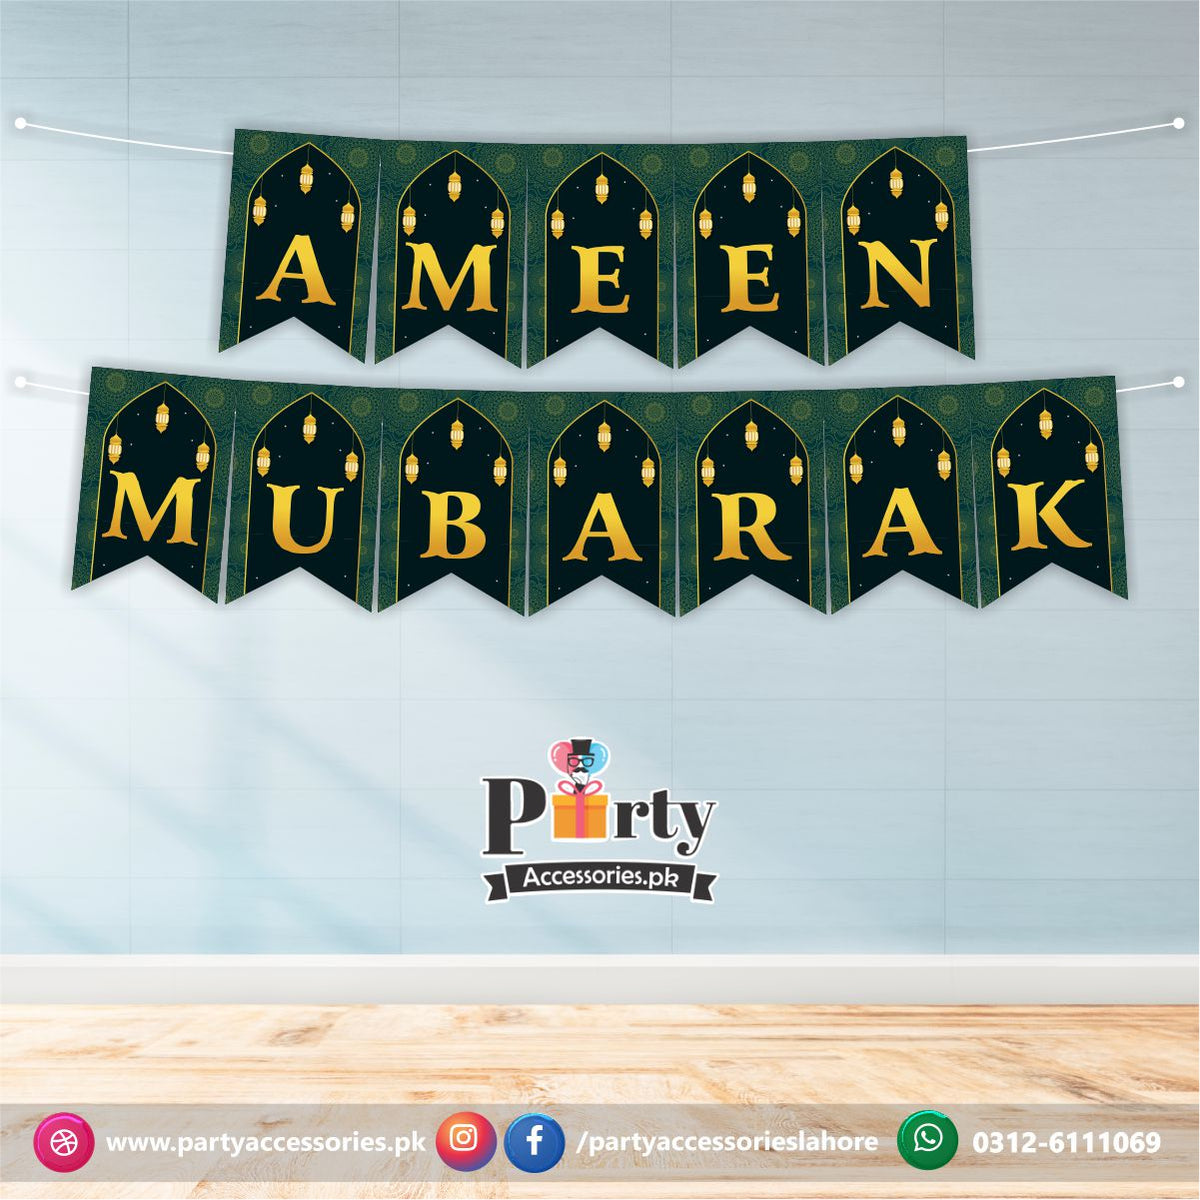 Customized Umrah Mubarak Wall Decoration poster on Panaflex in elegant –